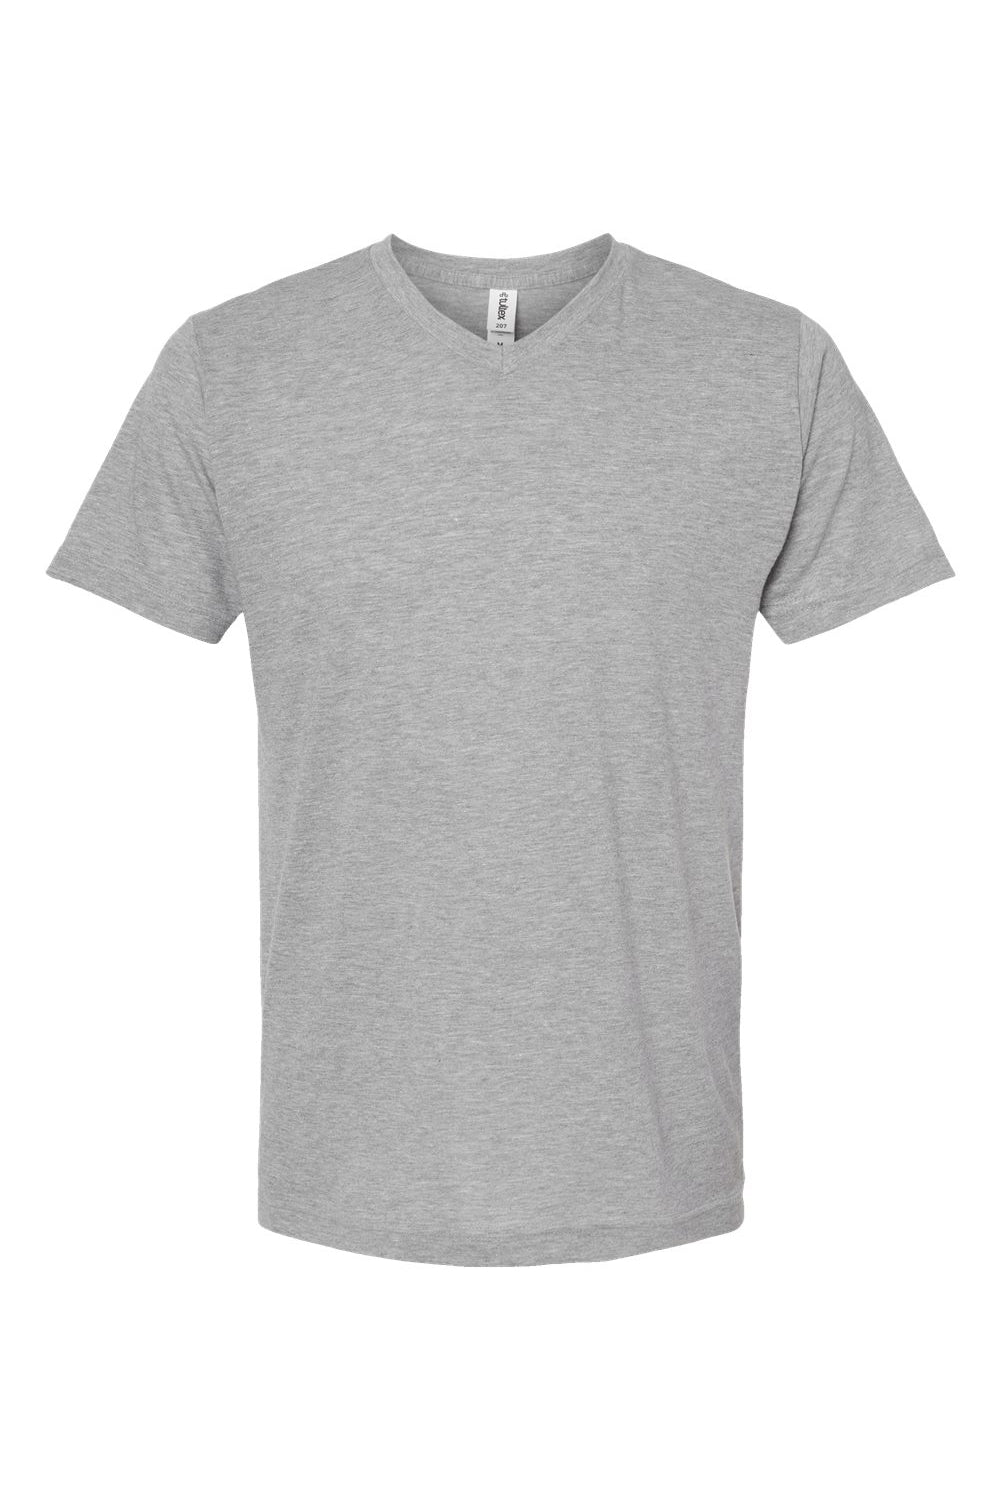 Tultex 207 Mens Poly-Rich Short Sleeve V-Neck T-Shirt Heather Grey Flat Front